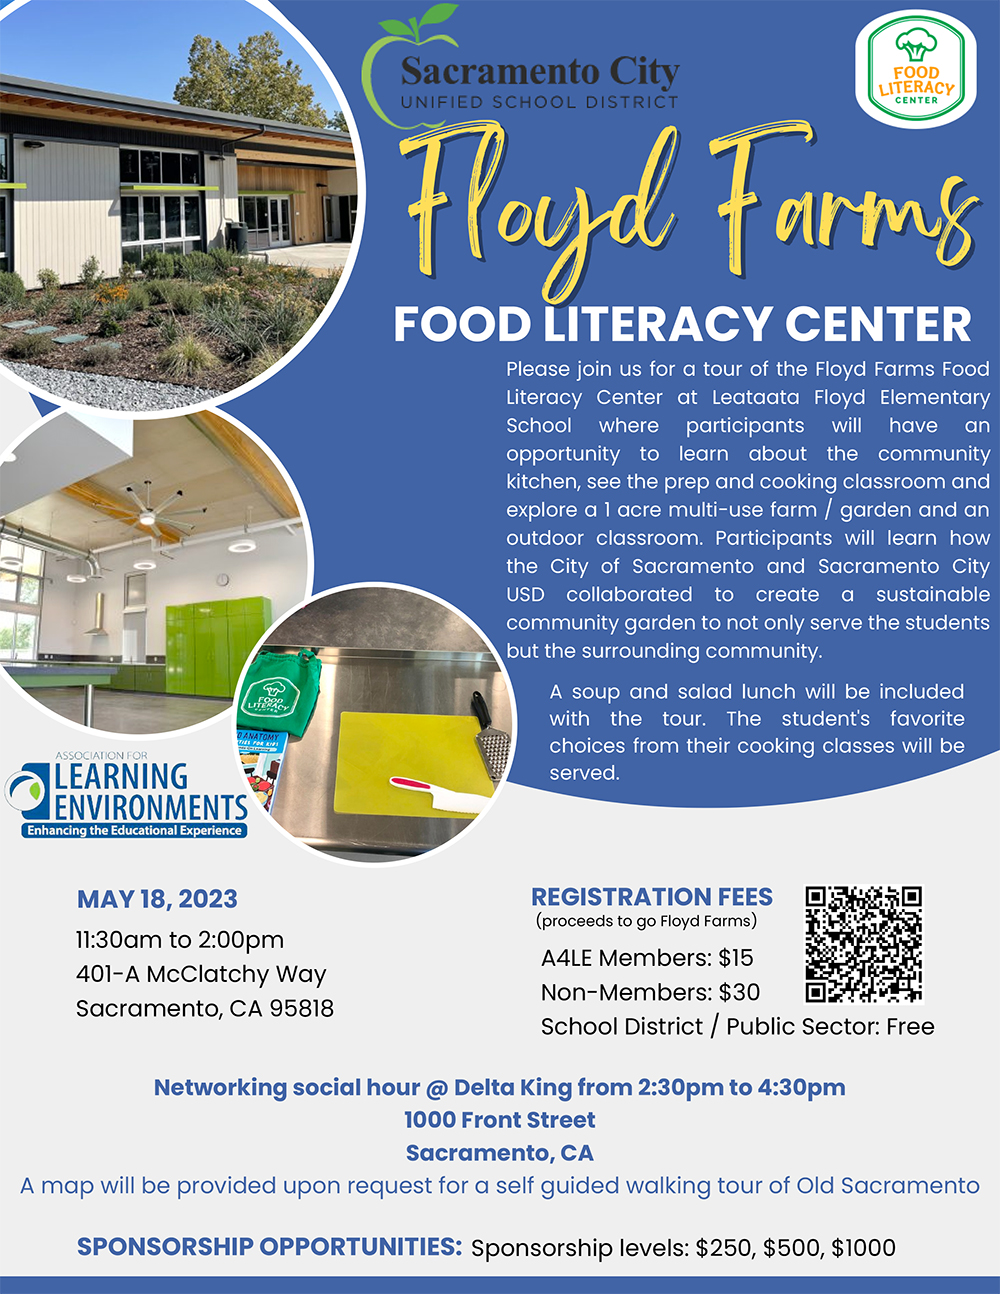 Floyd Farms Food Literacy Center